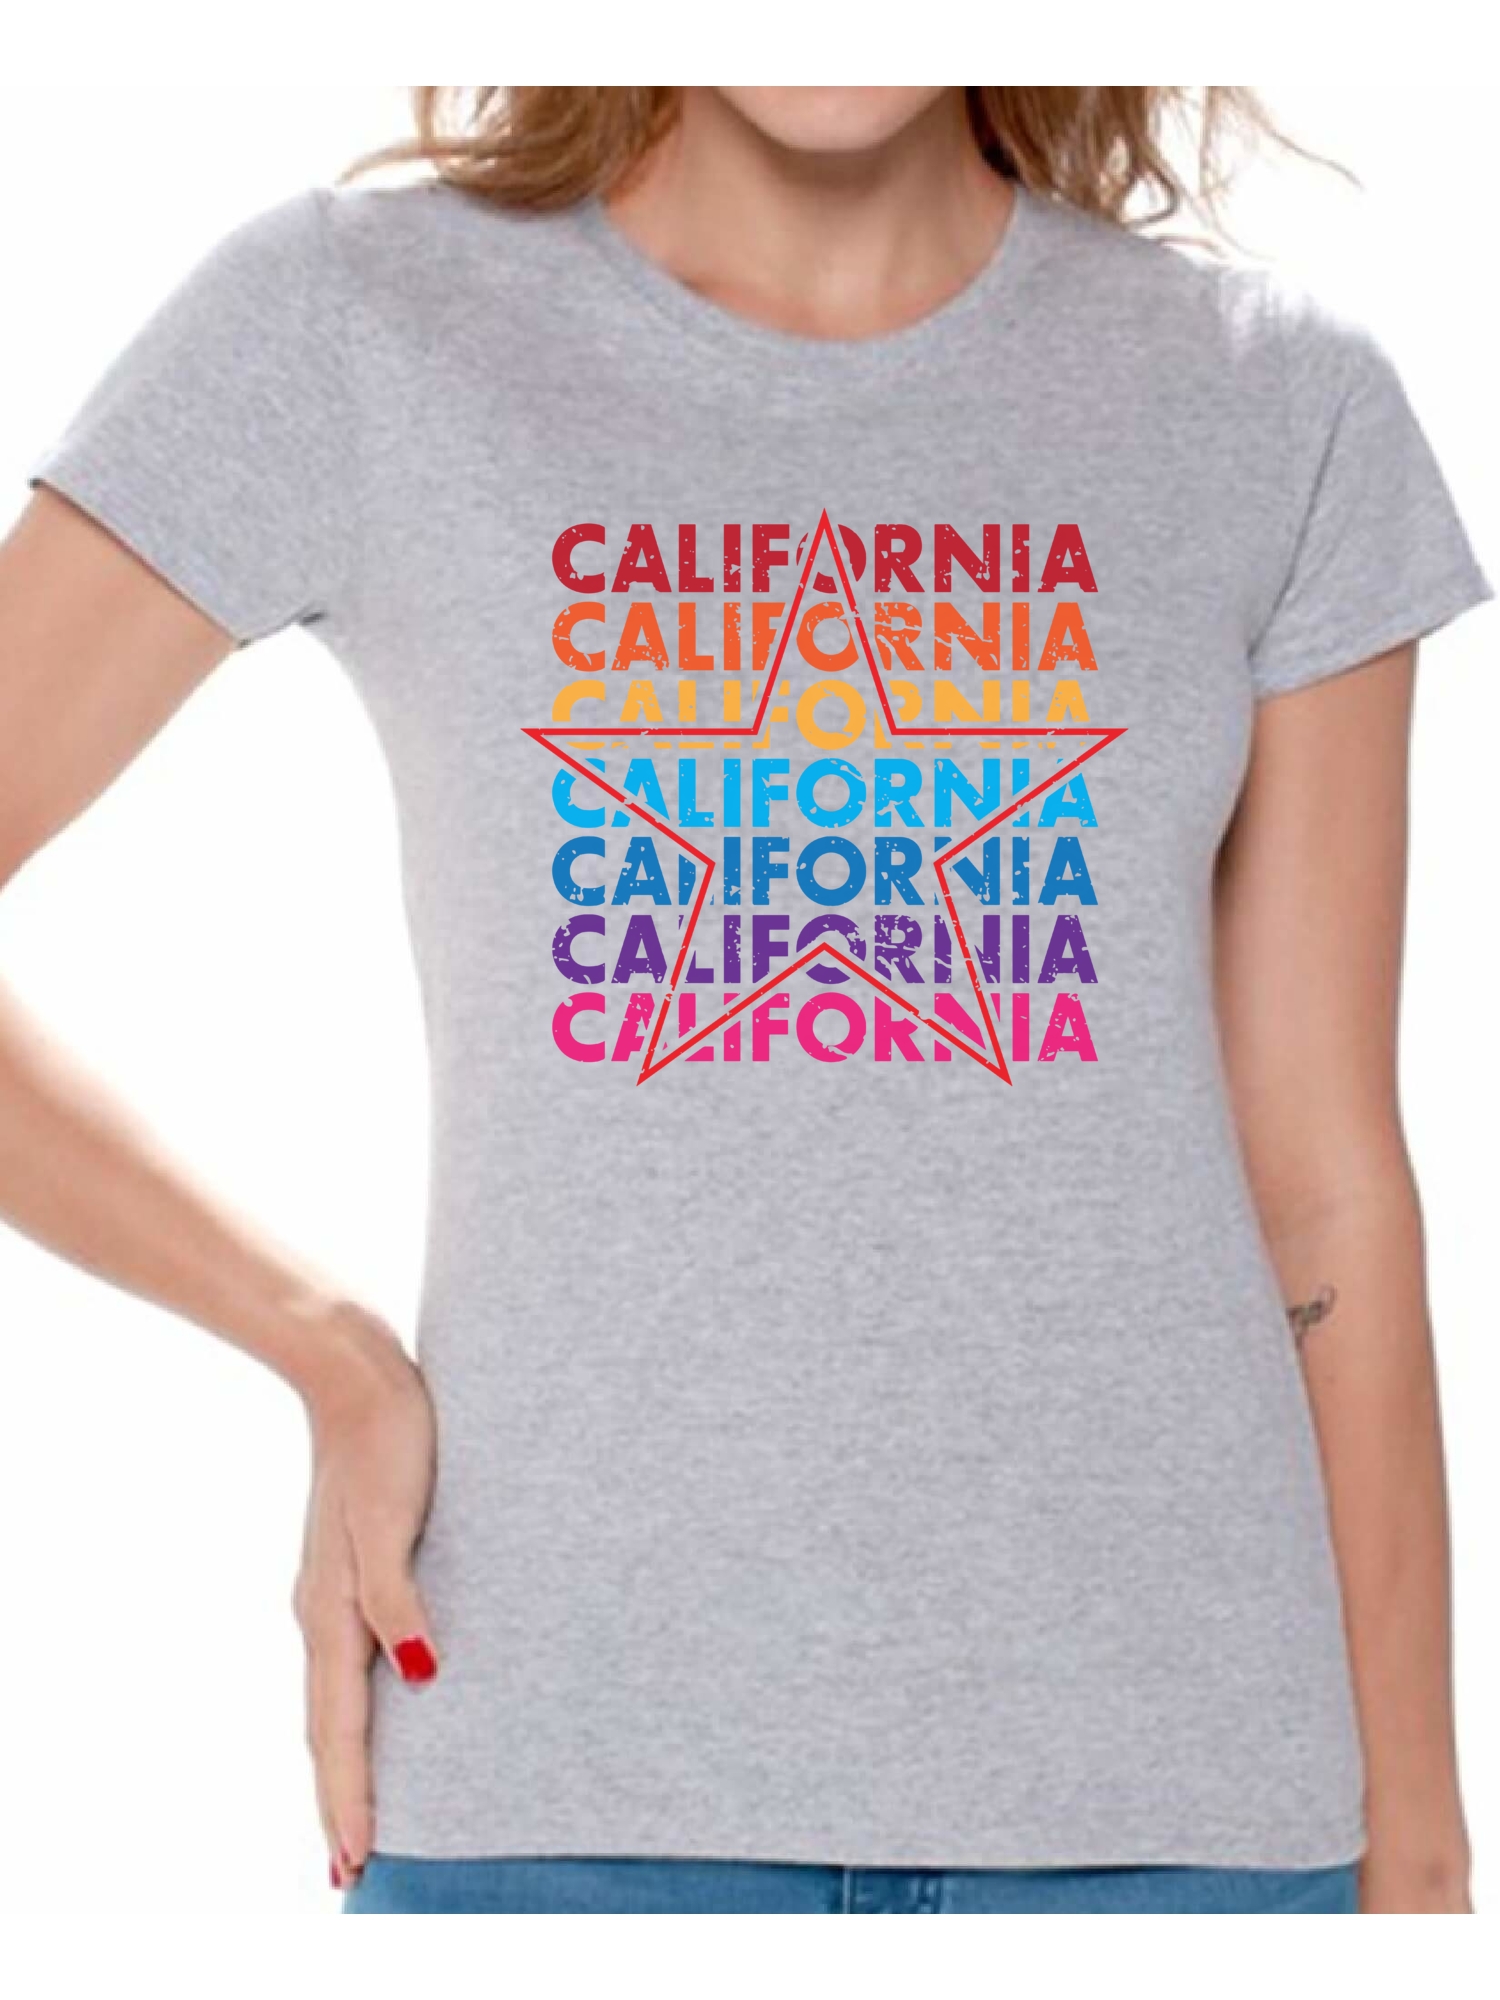 Awkward Styles California Star Women Shirt Gifts for Women 80s T shirt for Women San Francisco California State Women Tshirt I Love California United States T-shirt for Women Los Angeles - image 1 of 4